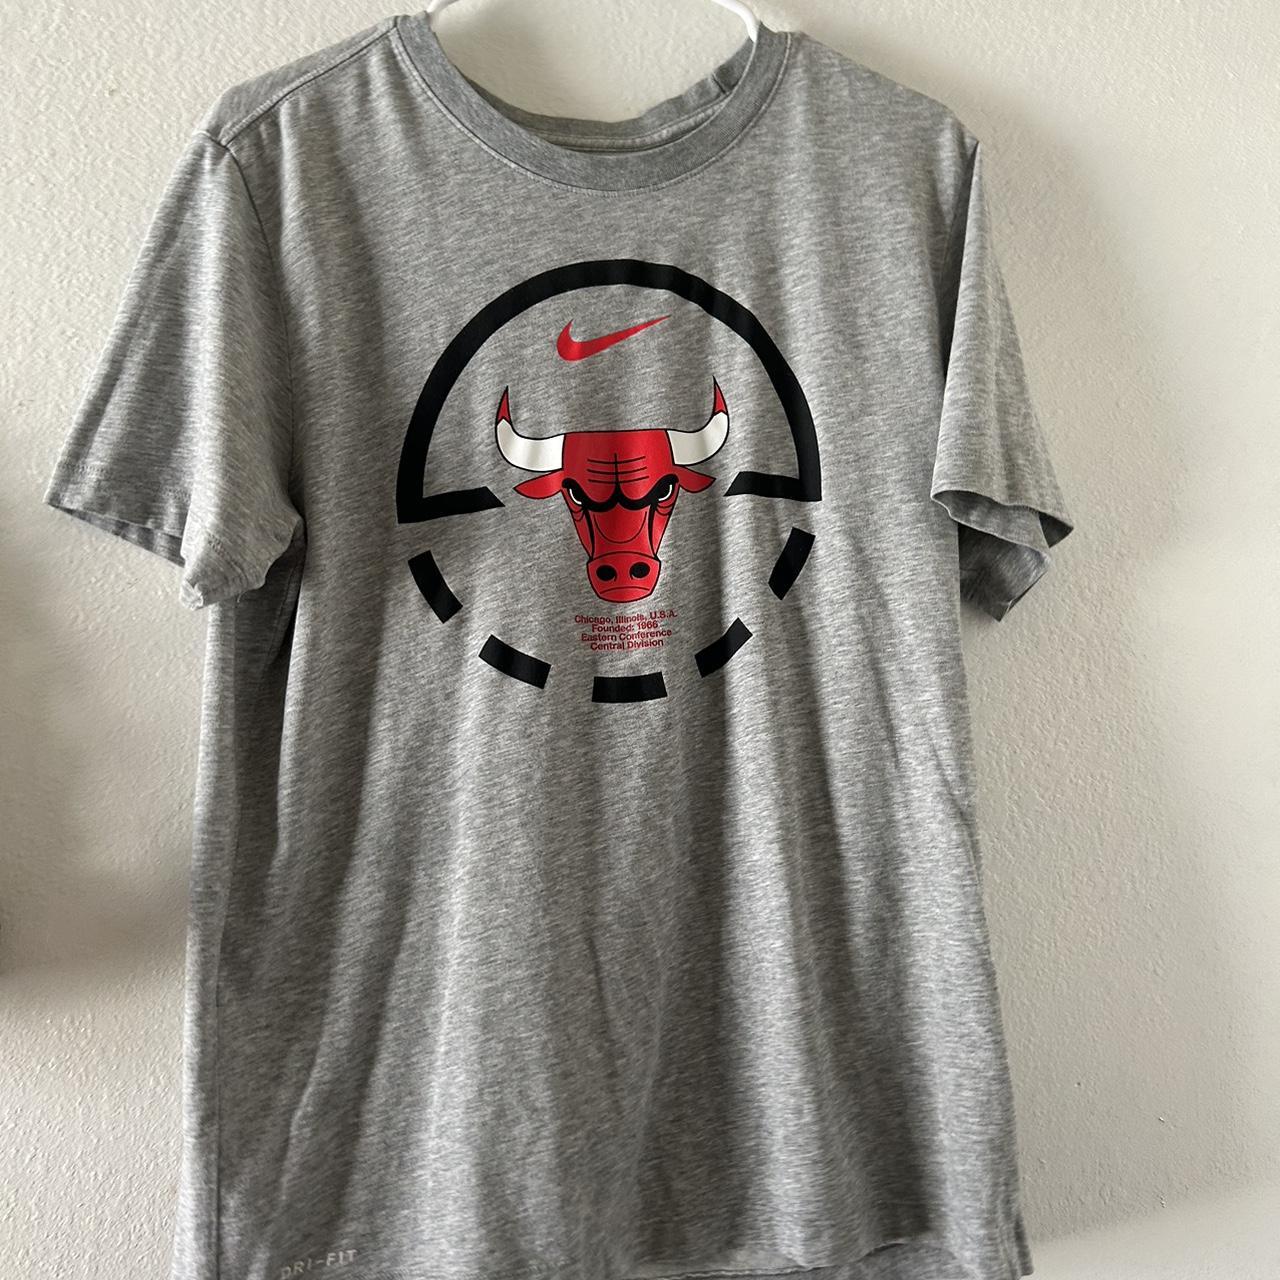 Chicago Bulls T-Shirt size M worn a few times i - Depop